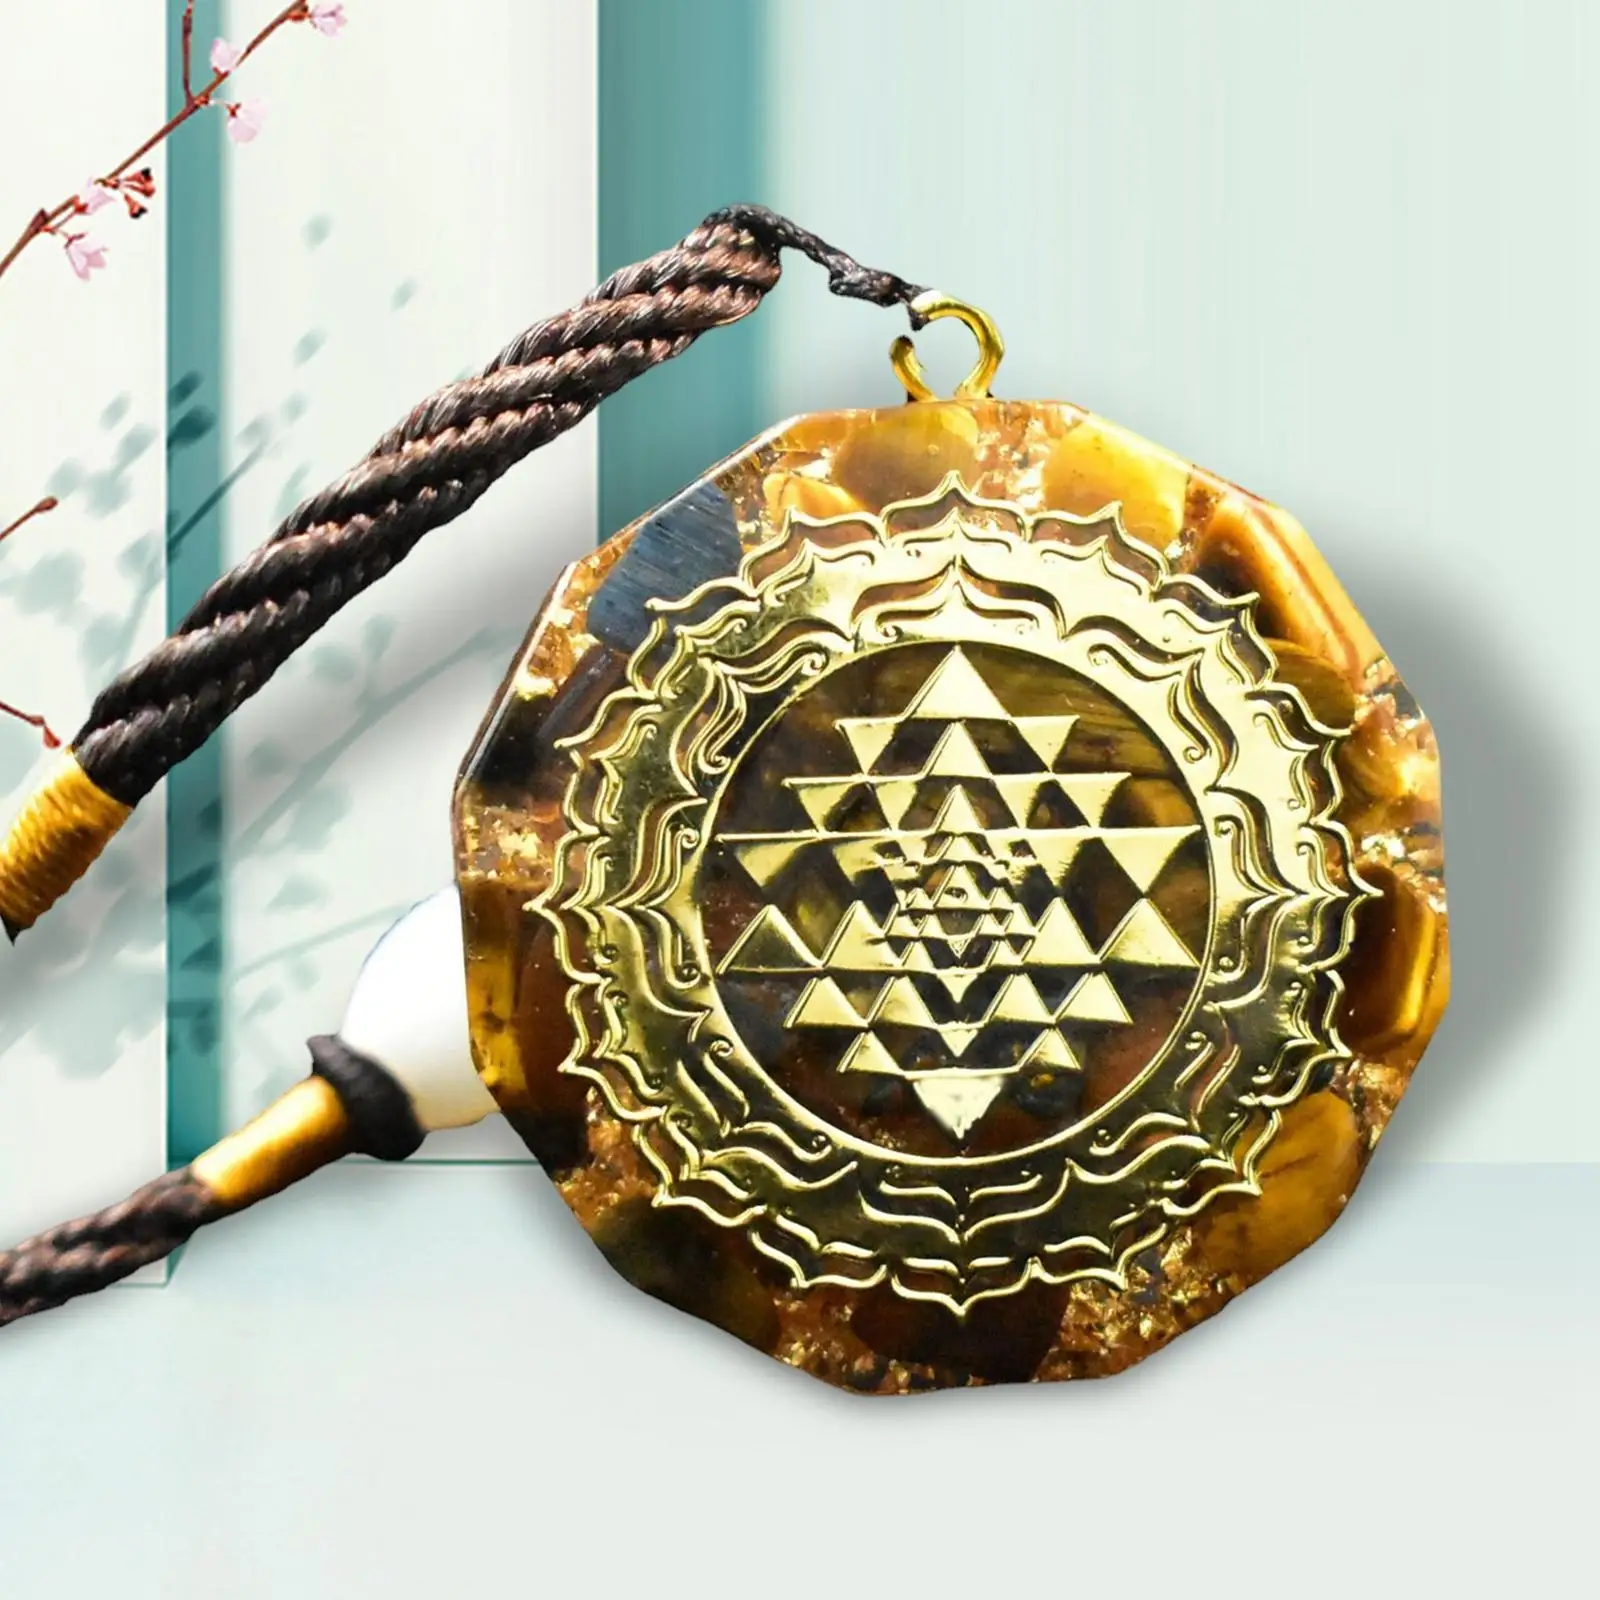 Tiger Eye Crystal Pendant Necklace Geometry Pendant Gifts Stone Pendant for Birthdays Easter Wedding Christmas Men Women